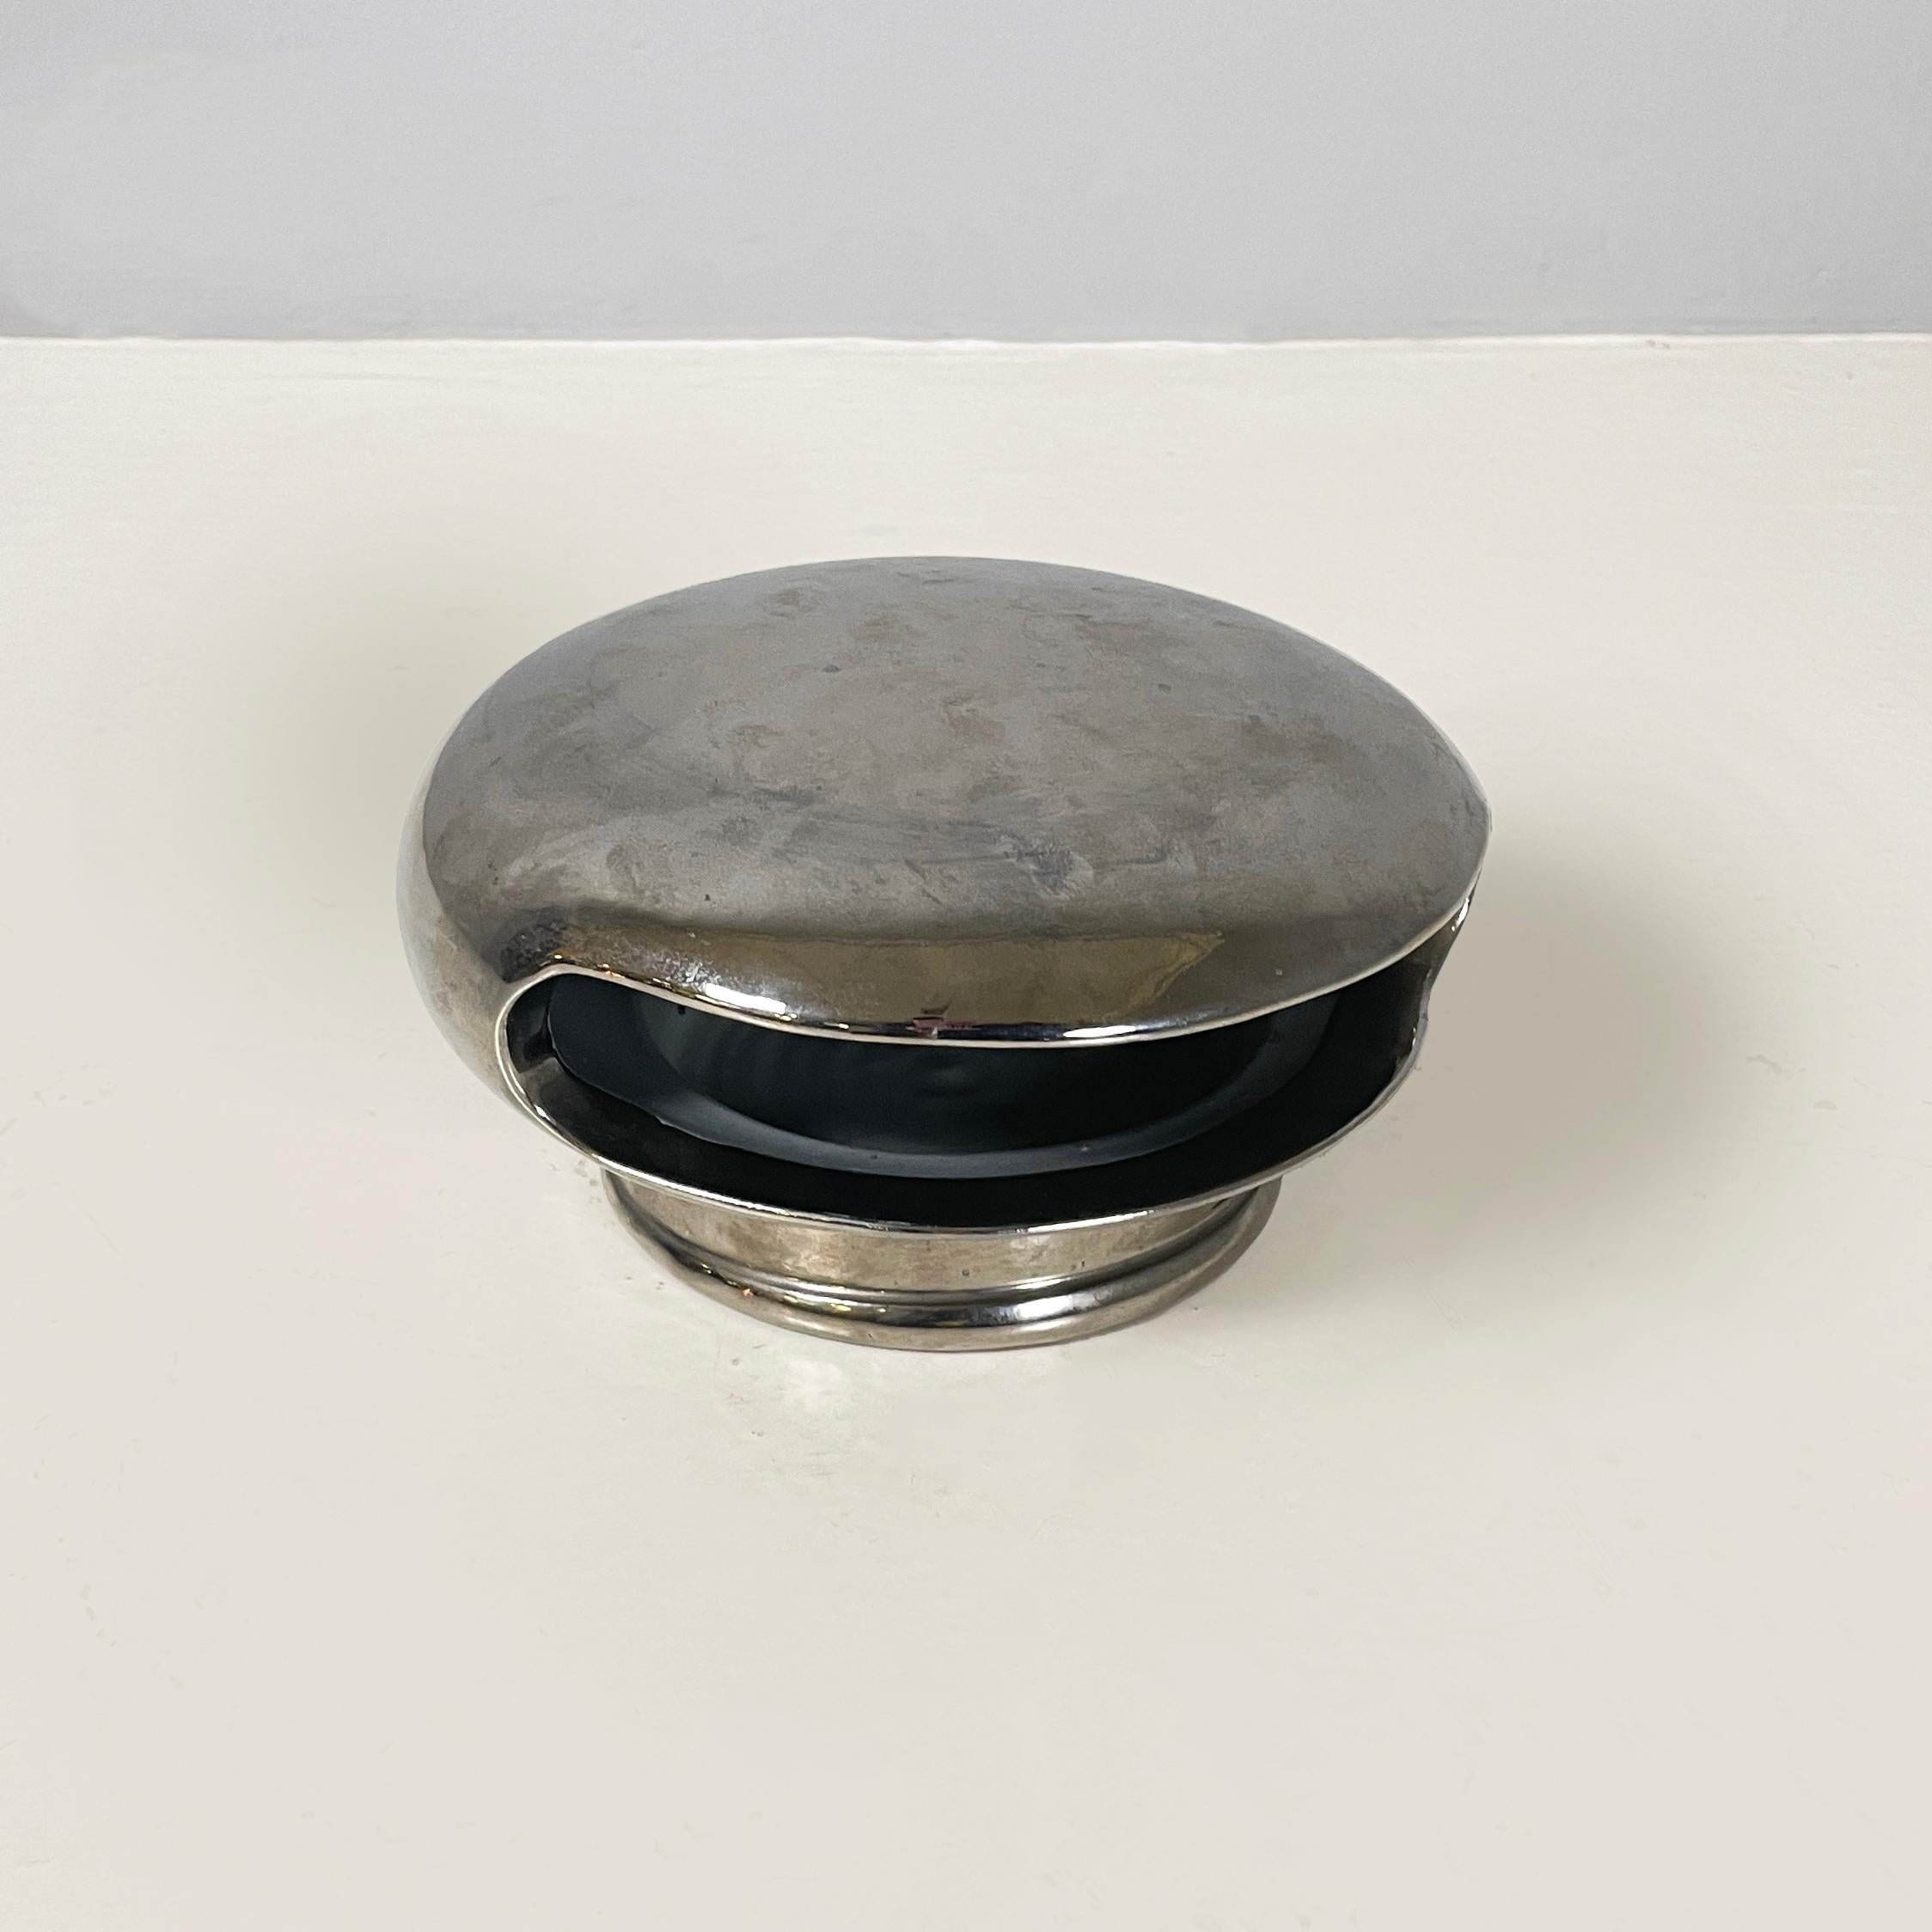 Ceramic Italian modern Decorative table object or sculpture in silver ceramic, 2000s For Sale